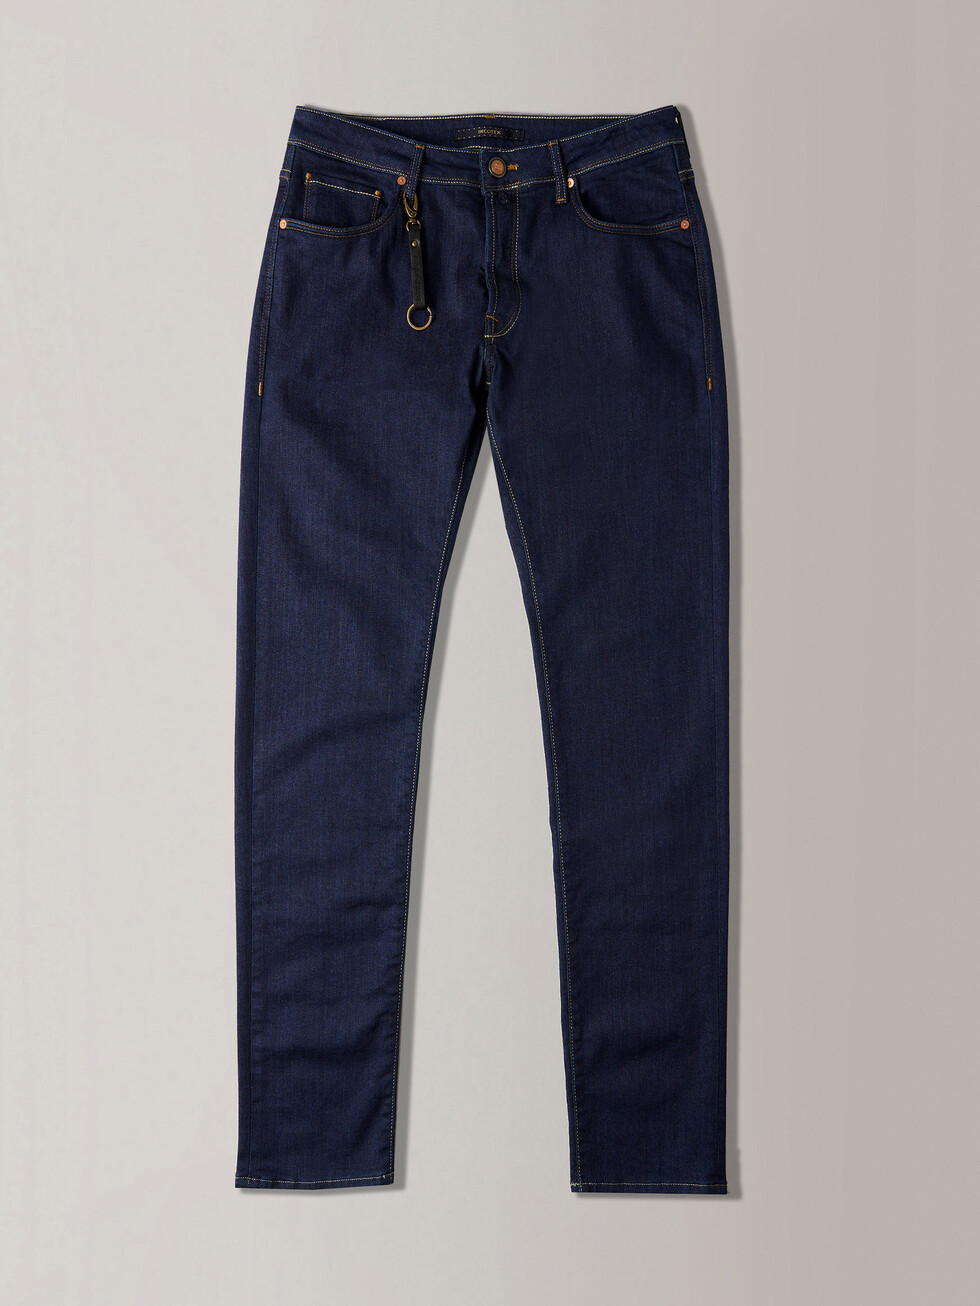 Pantalone cinque tasche slim fit in denim stretch  , Incotex Blue Division | Slowear